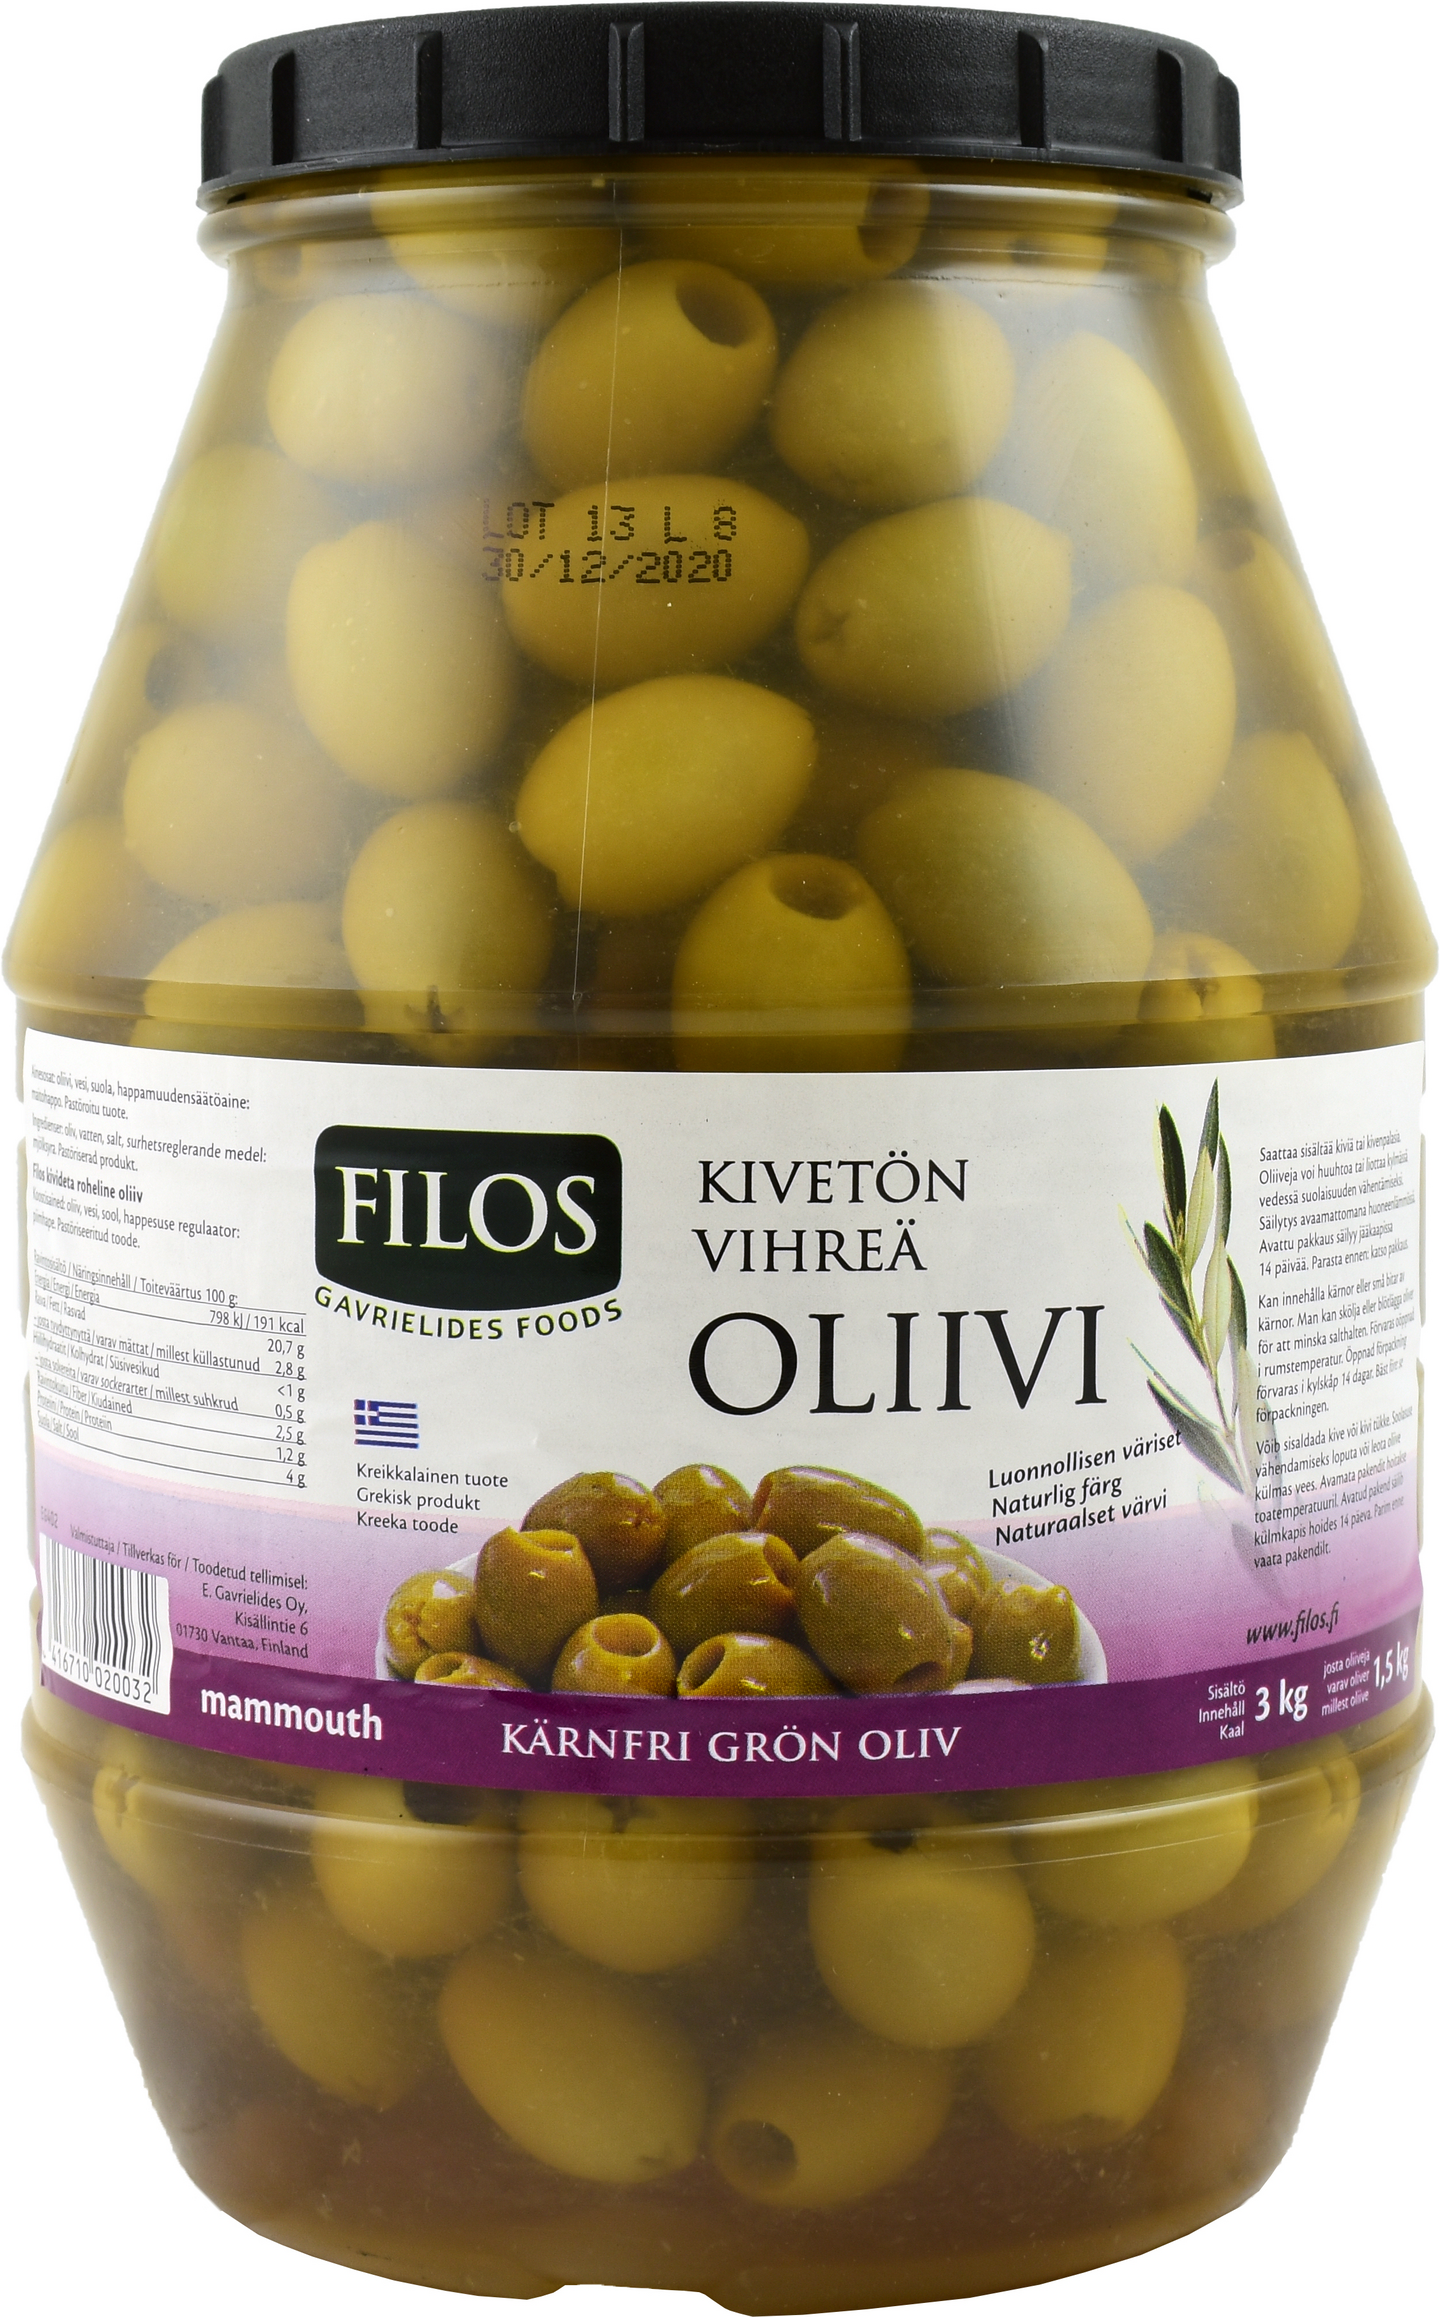 Filos vihreä oliivi kivetön 3/1,5 kg mammouth